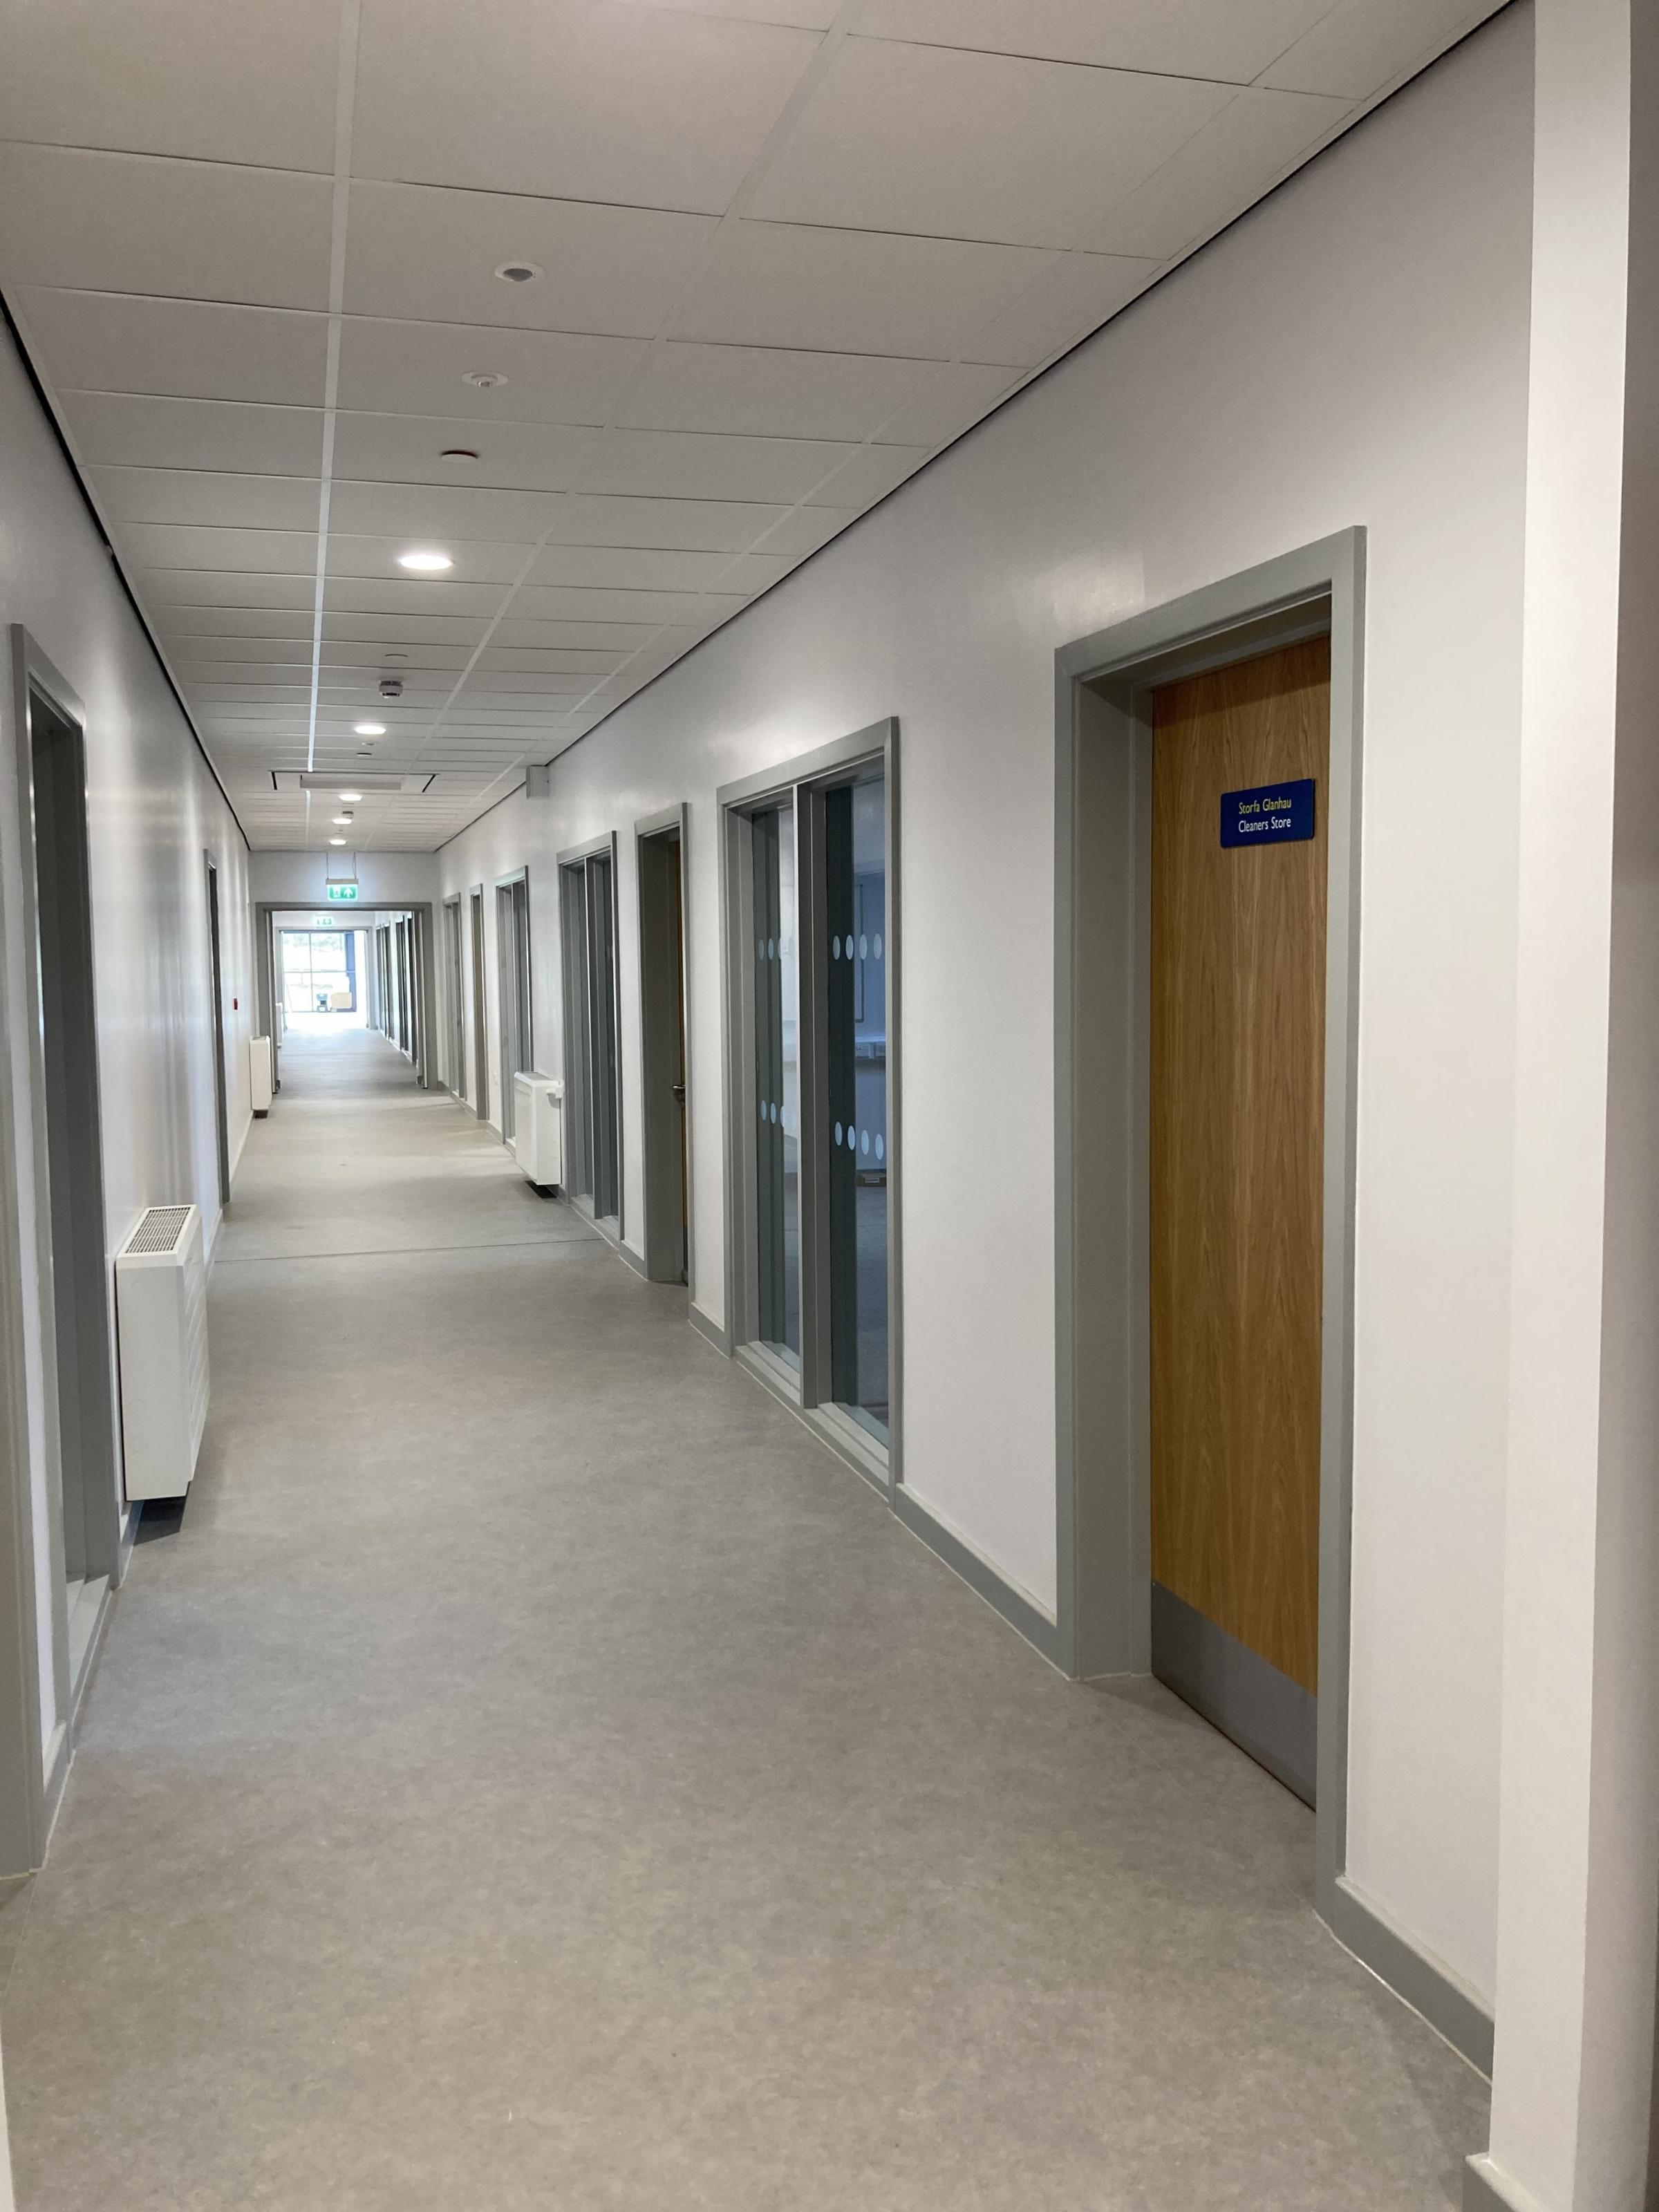 Spacious corridors at the new Ysgol Corn Hir (Image Dale Spridgeon)